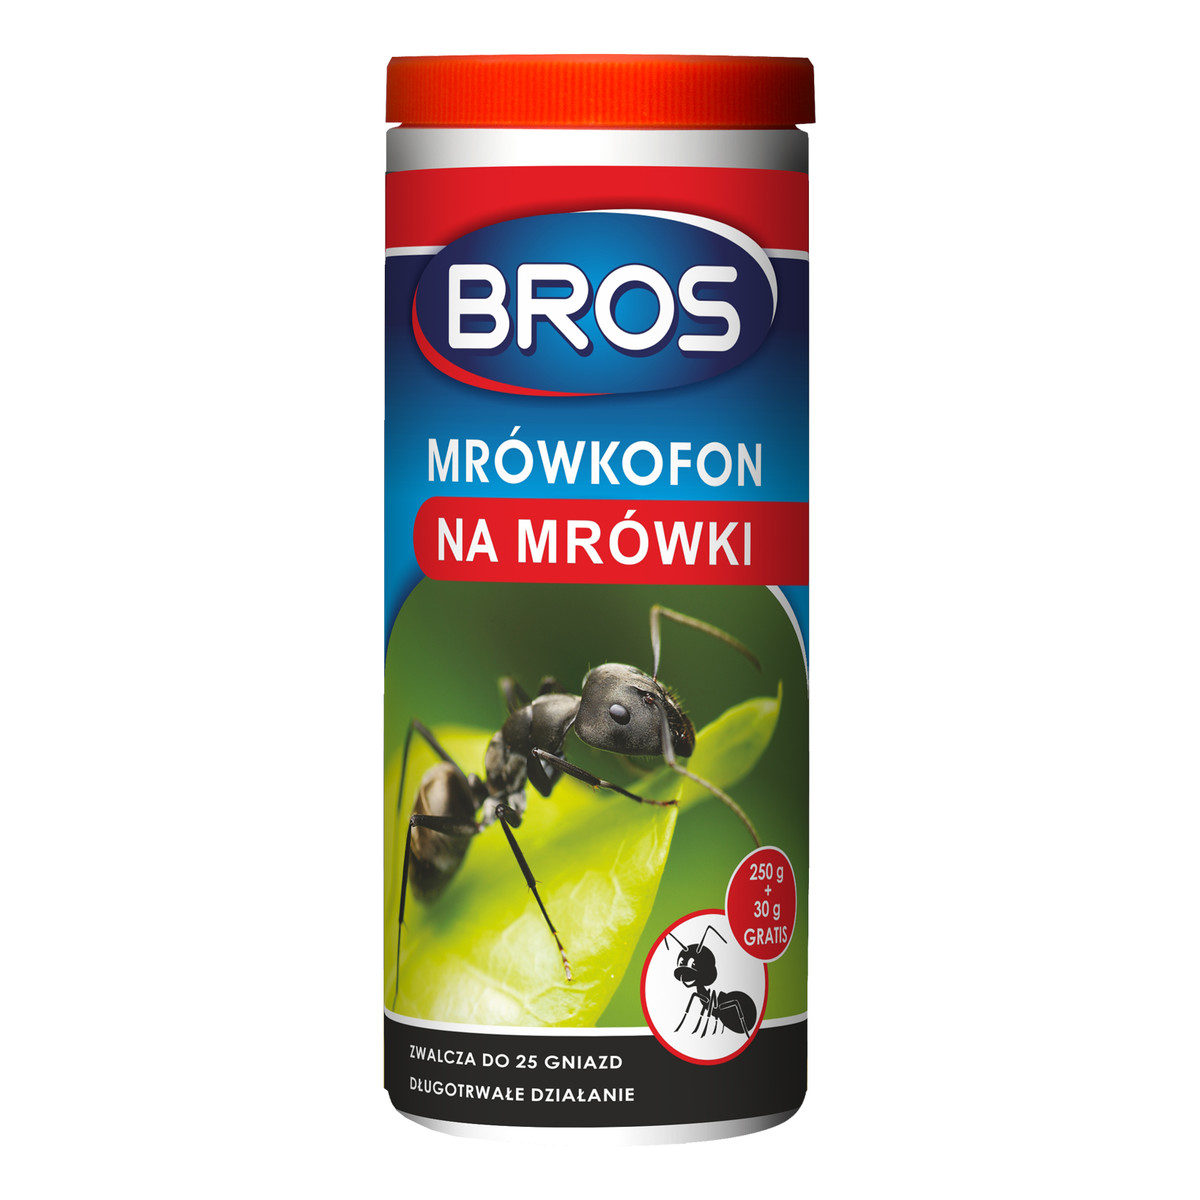 Bros Preparat na mrówki Mrówkofon 30g